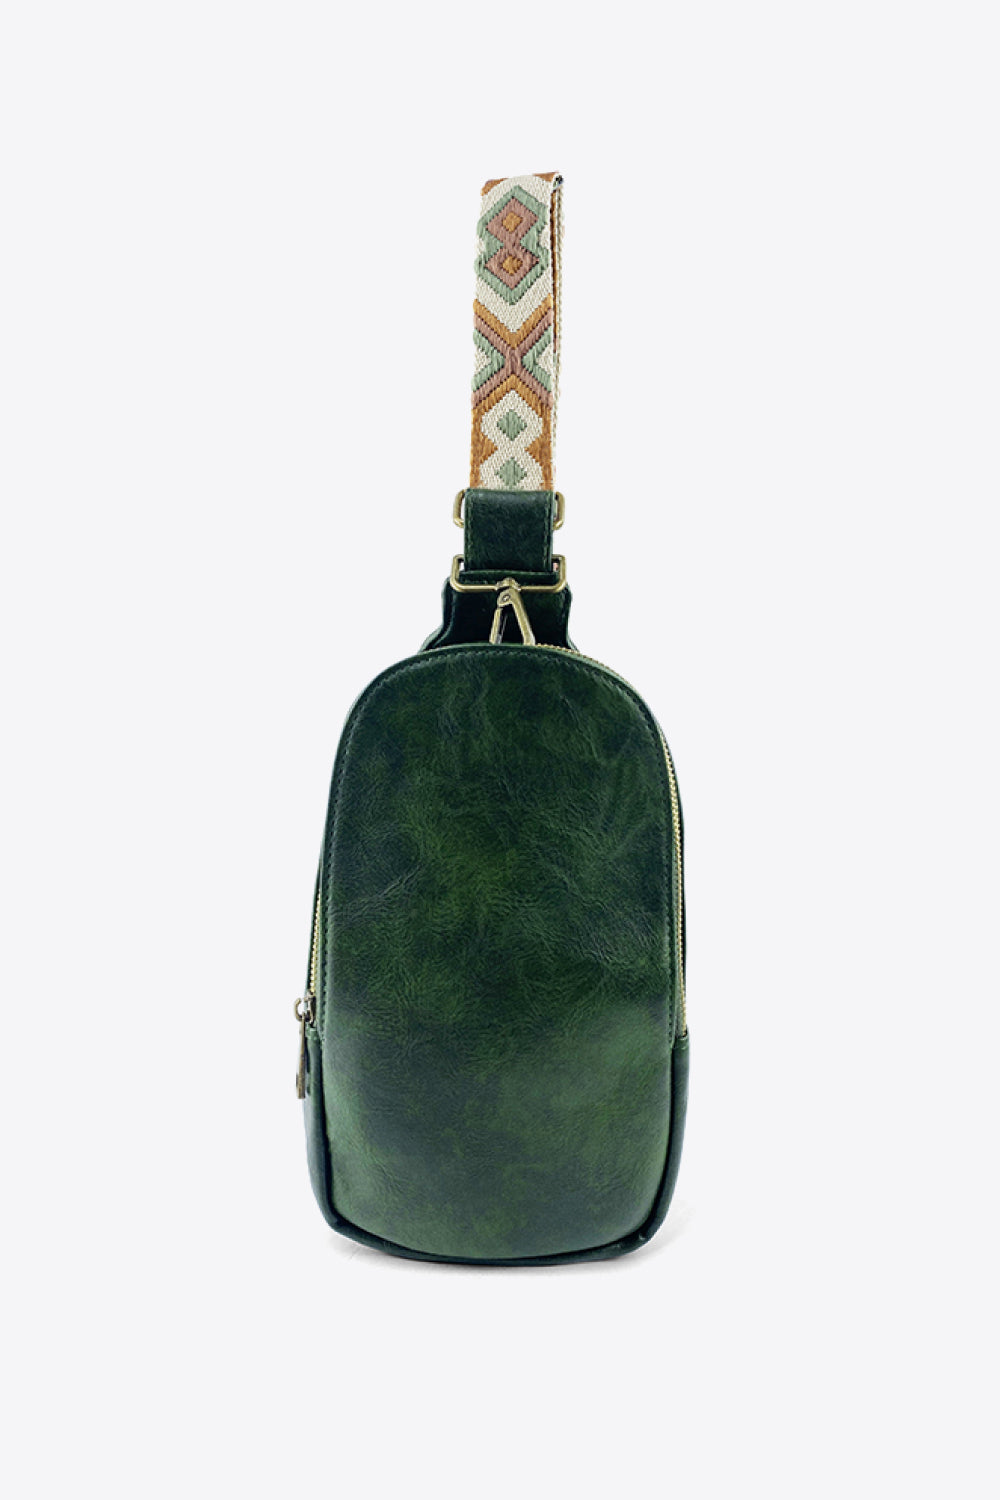 Adjustable Strap PU Leather Sling Bag - Tigbul's Fashion